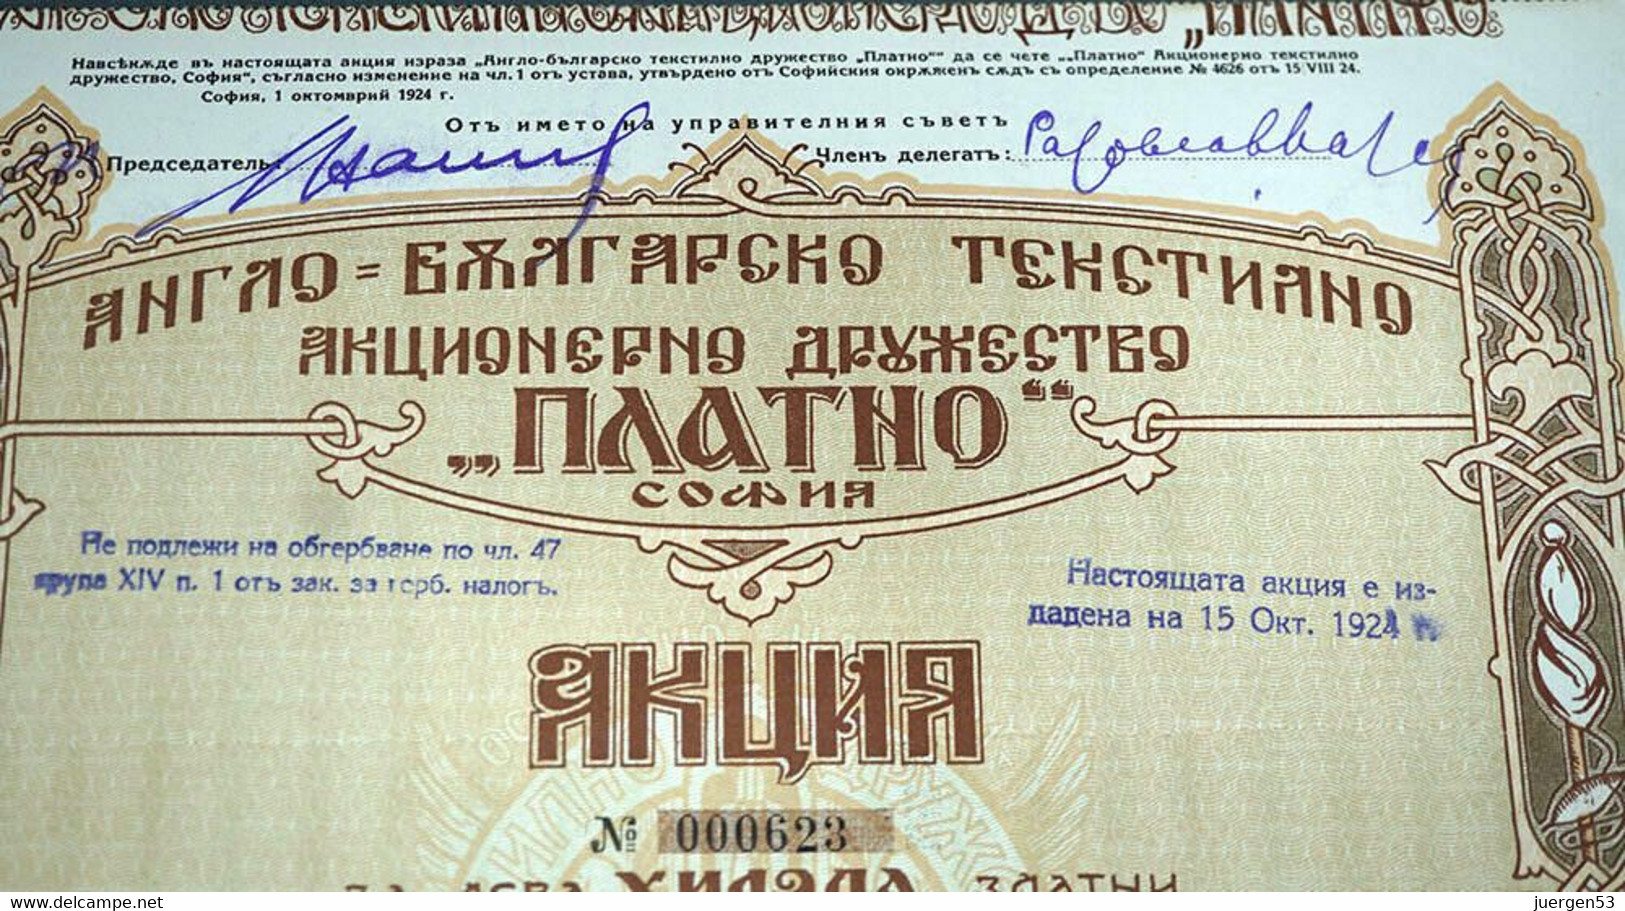 British Bulgarian Textile Company ”Platno”, 1923 - Textile